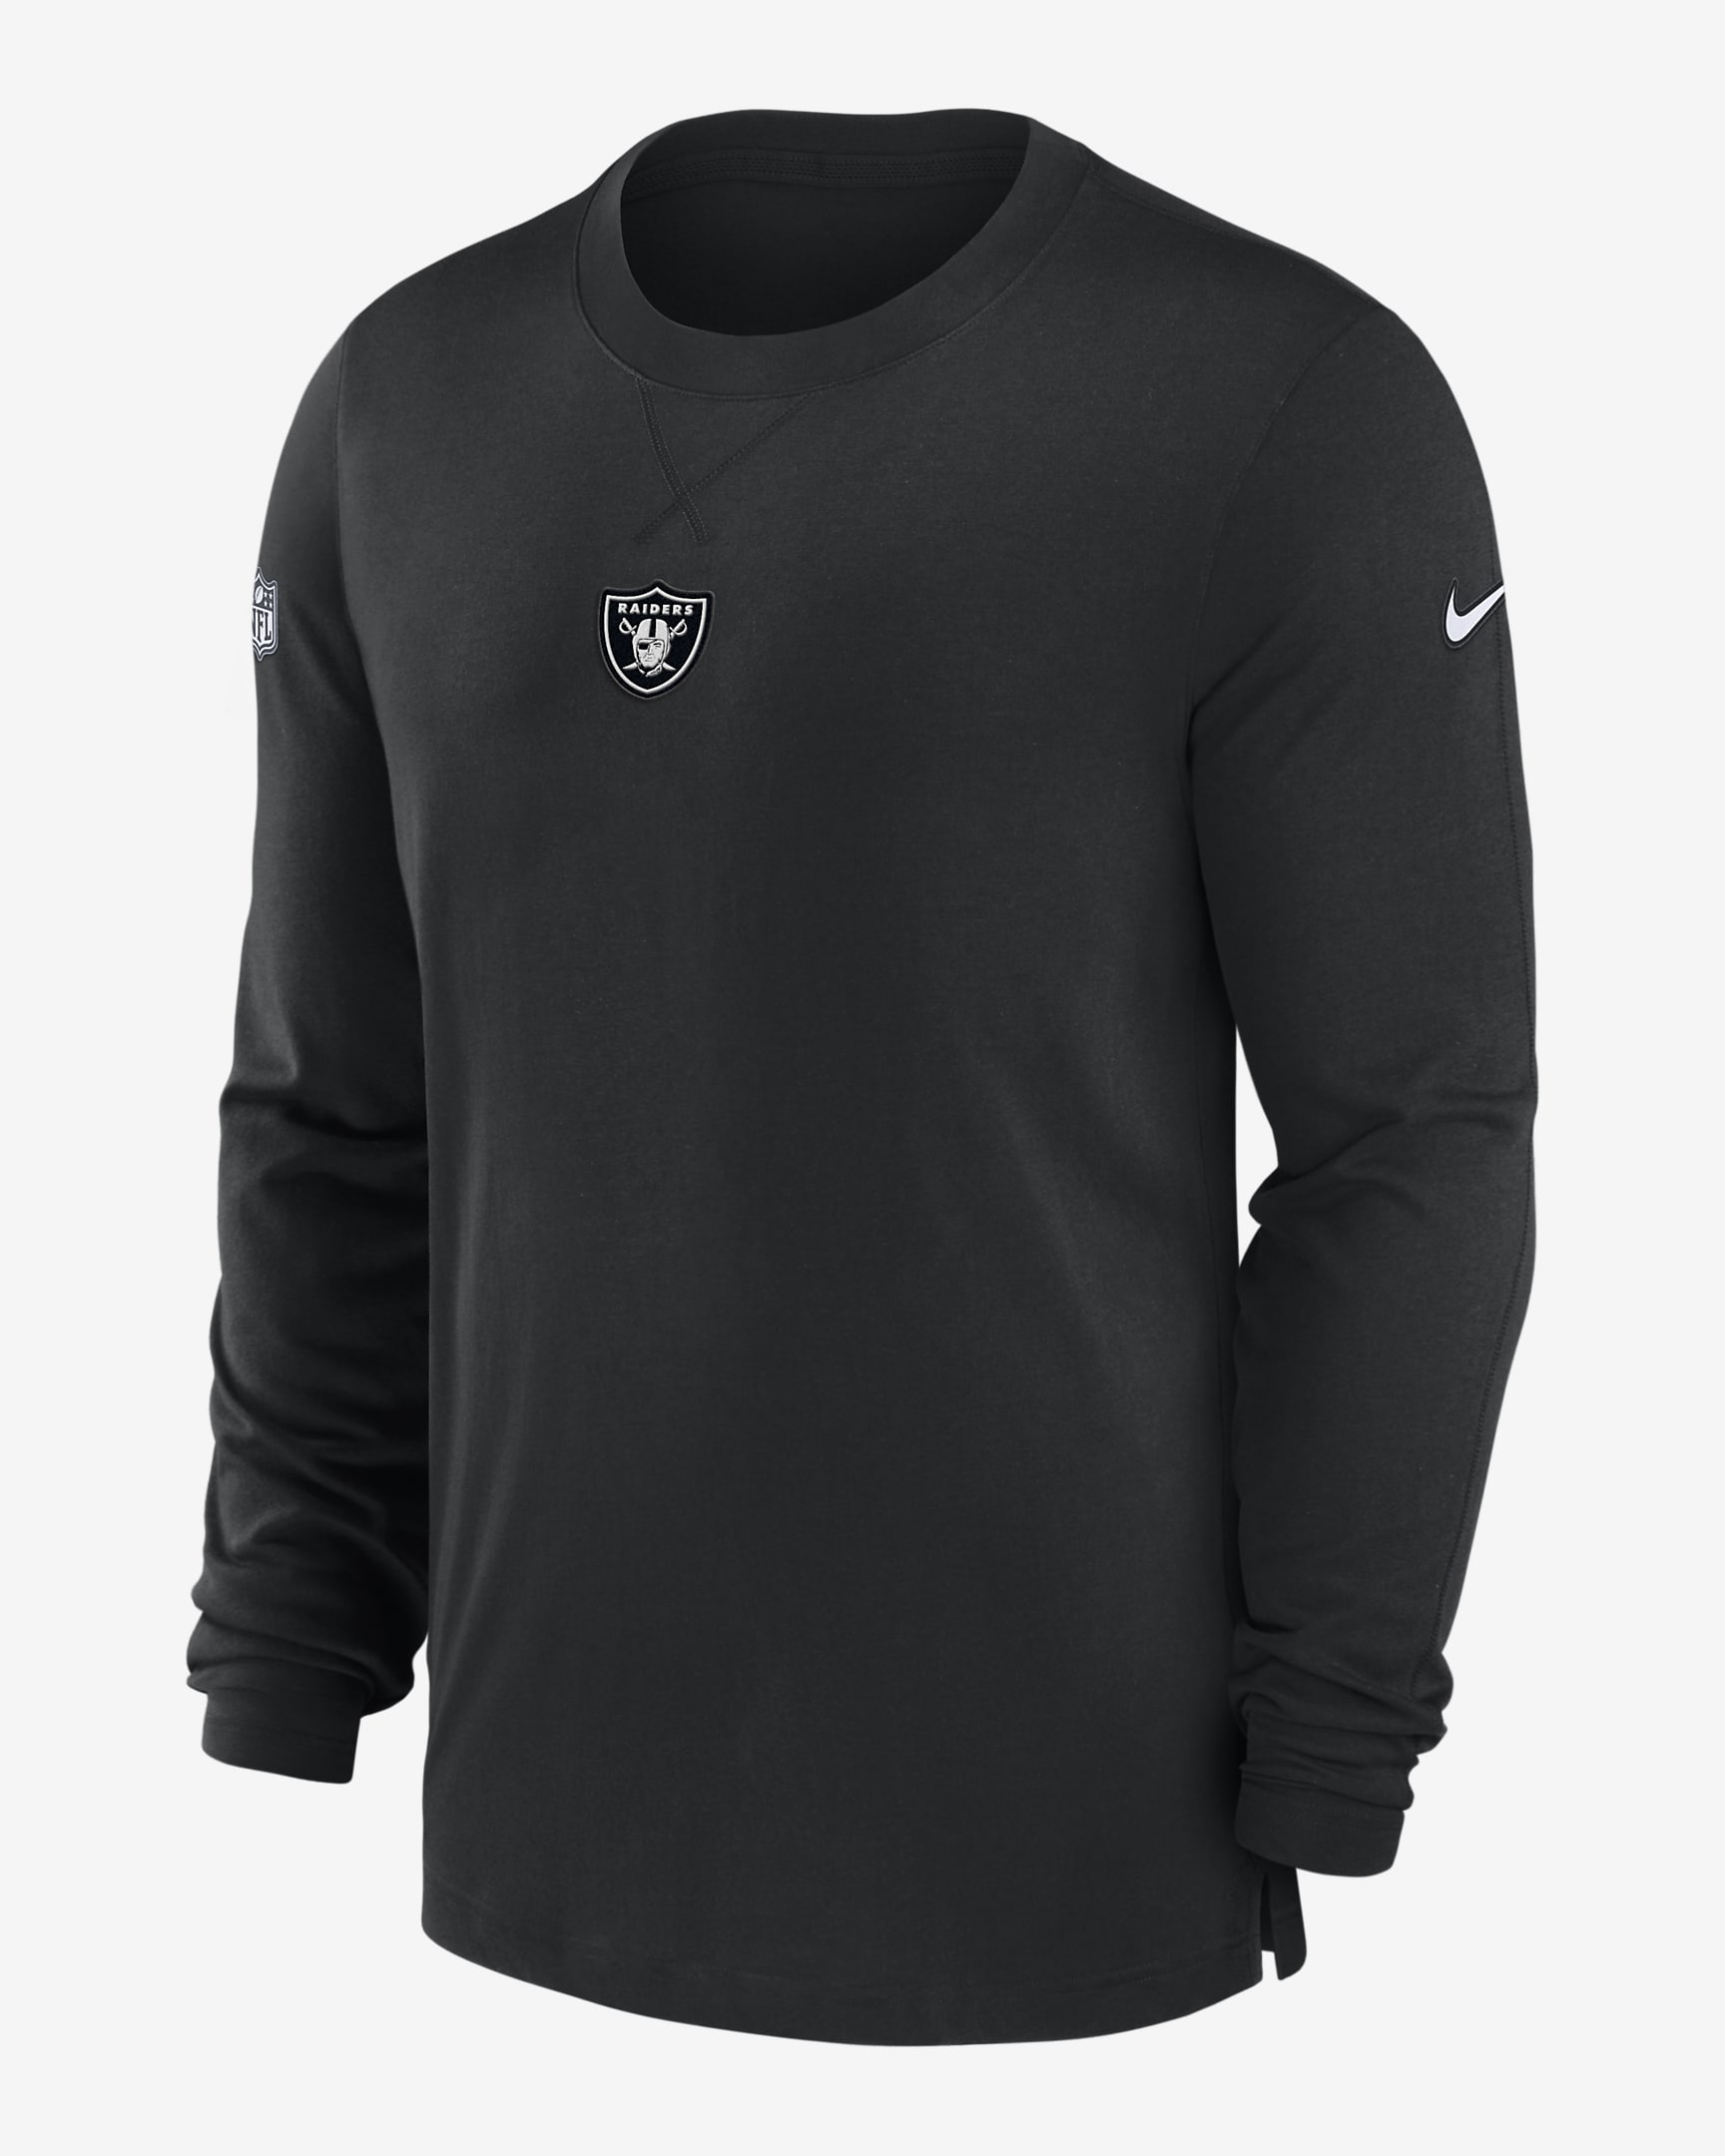 Las Vegas Raiders Sideline Men’s Nike Dri-FIT NFL Long-Sleeve Top. Nike.com